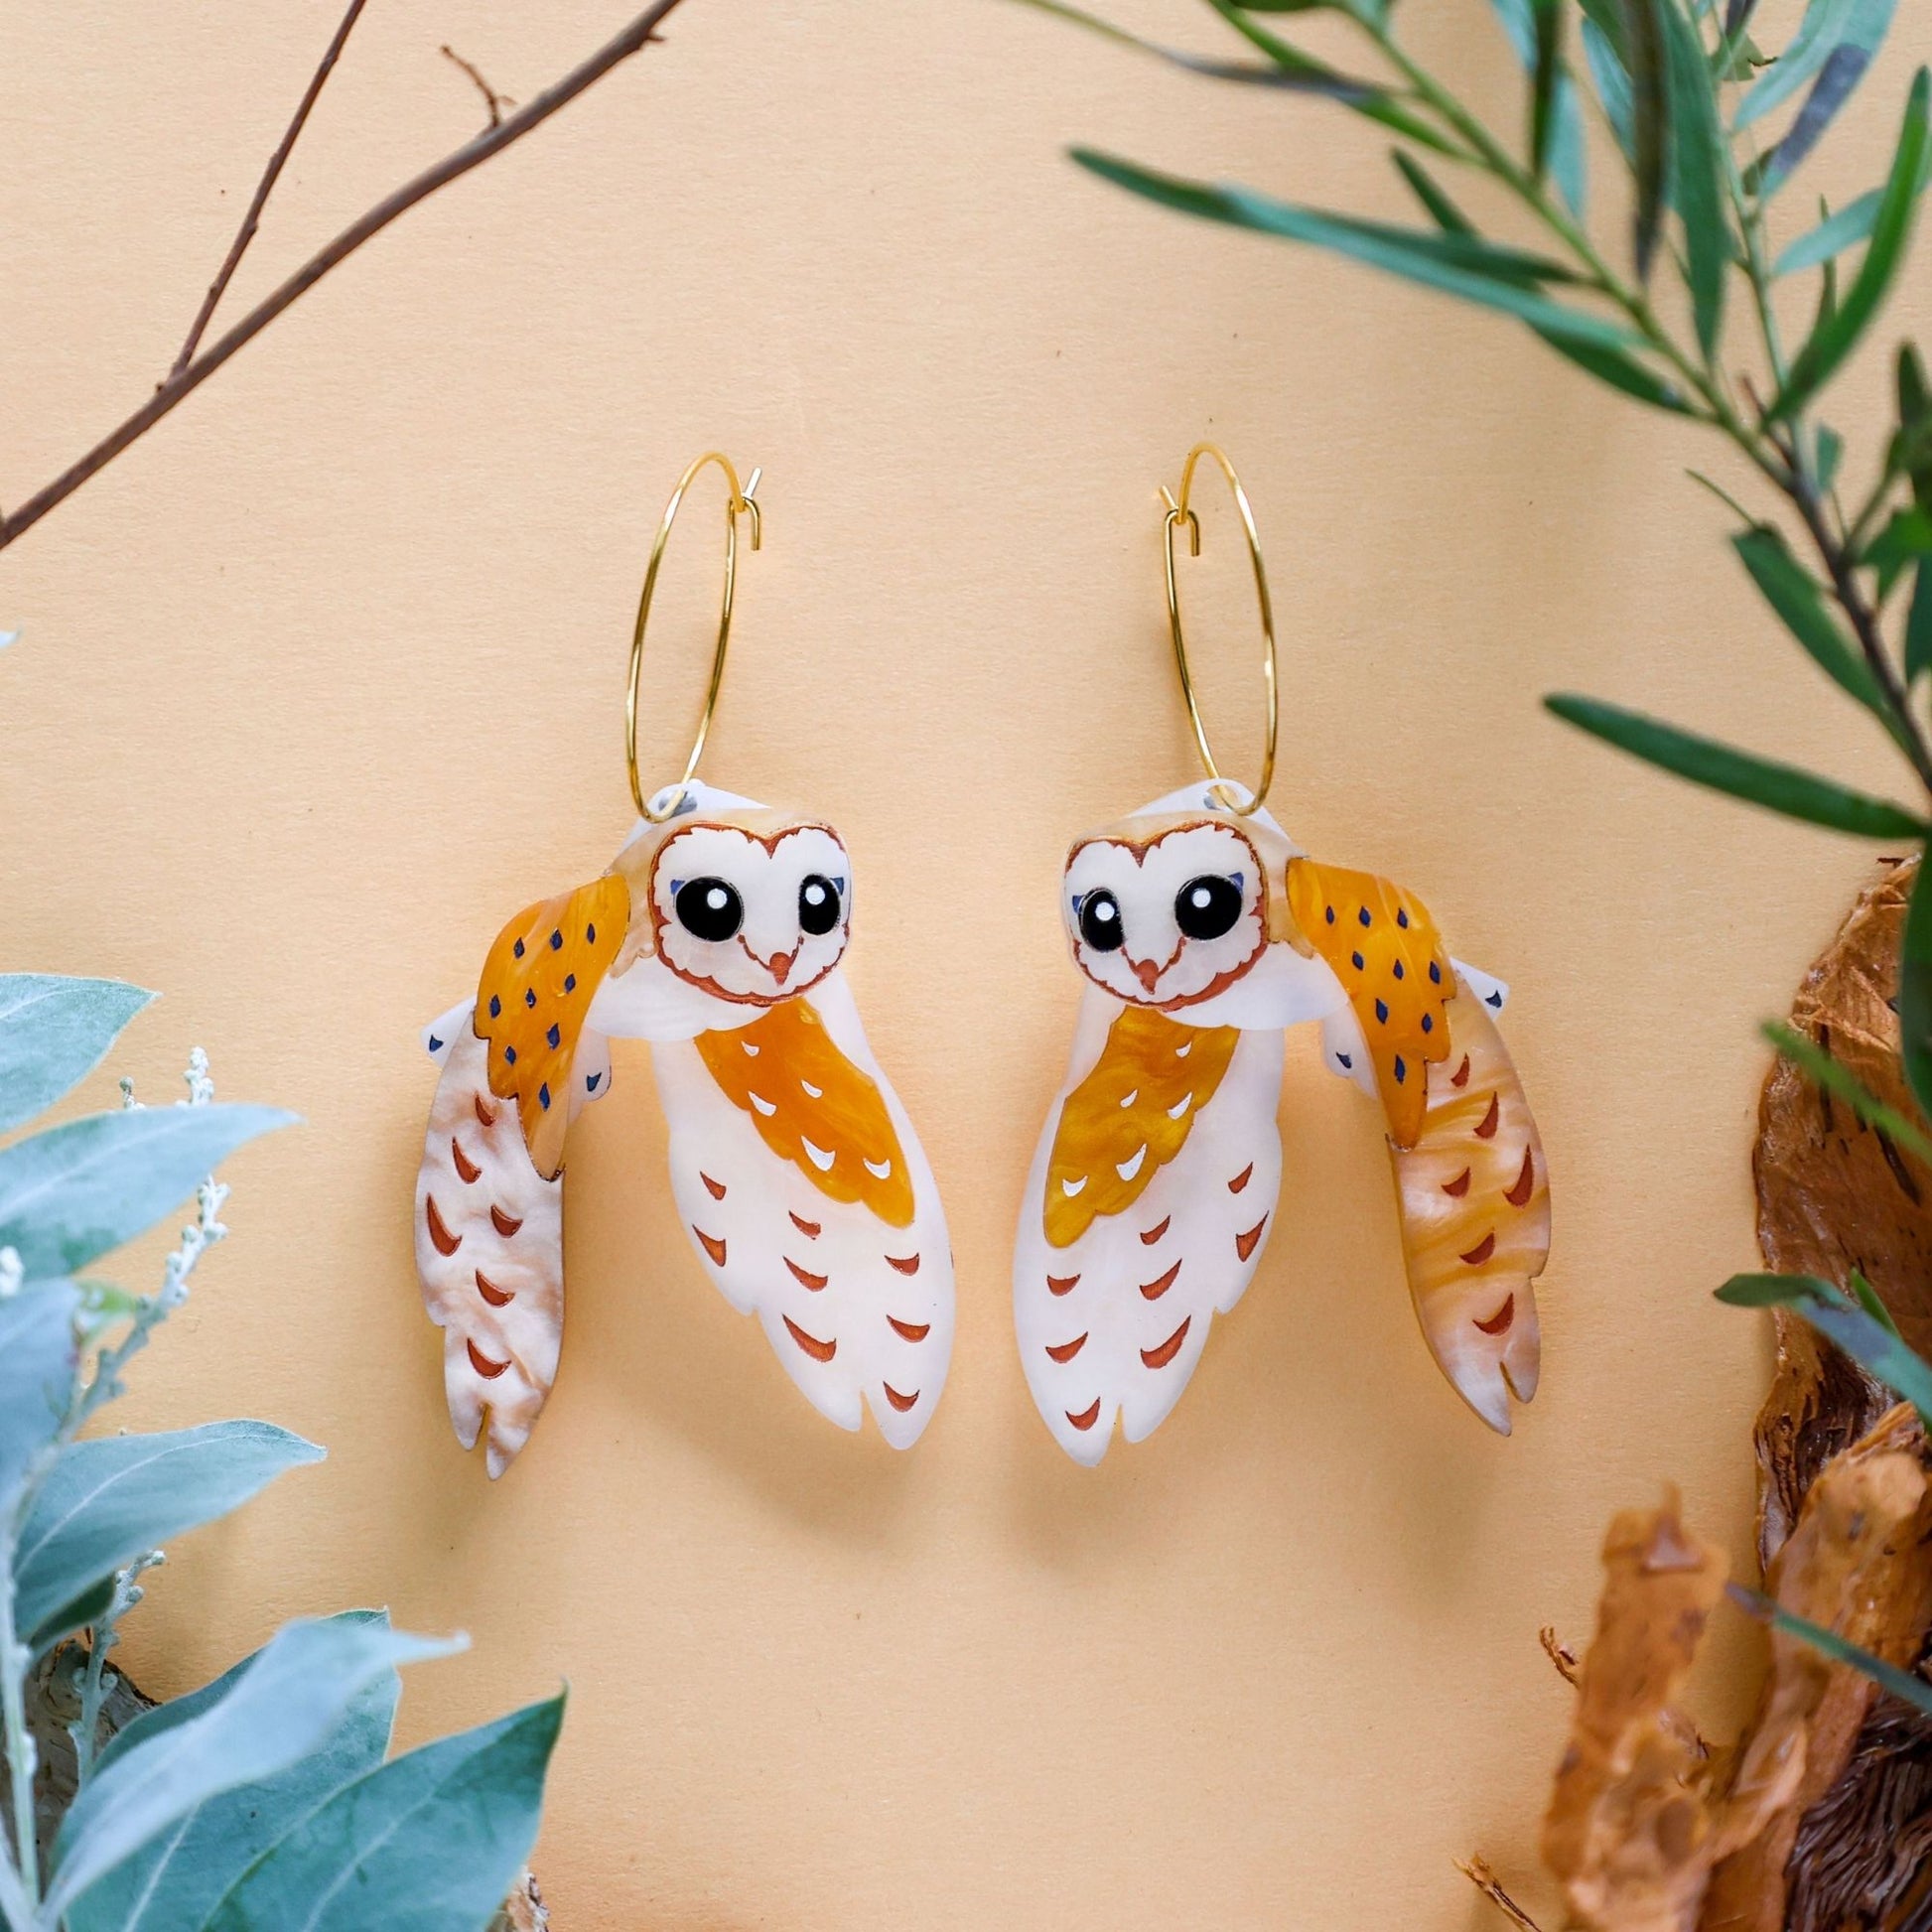 BINKABU Barn Owl Hoops handmade acrylic bird earrings